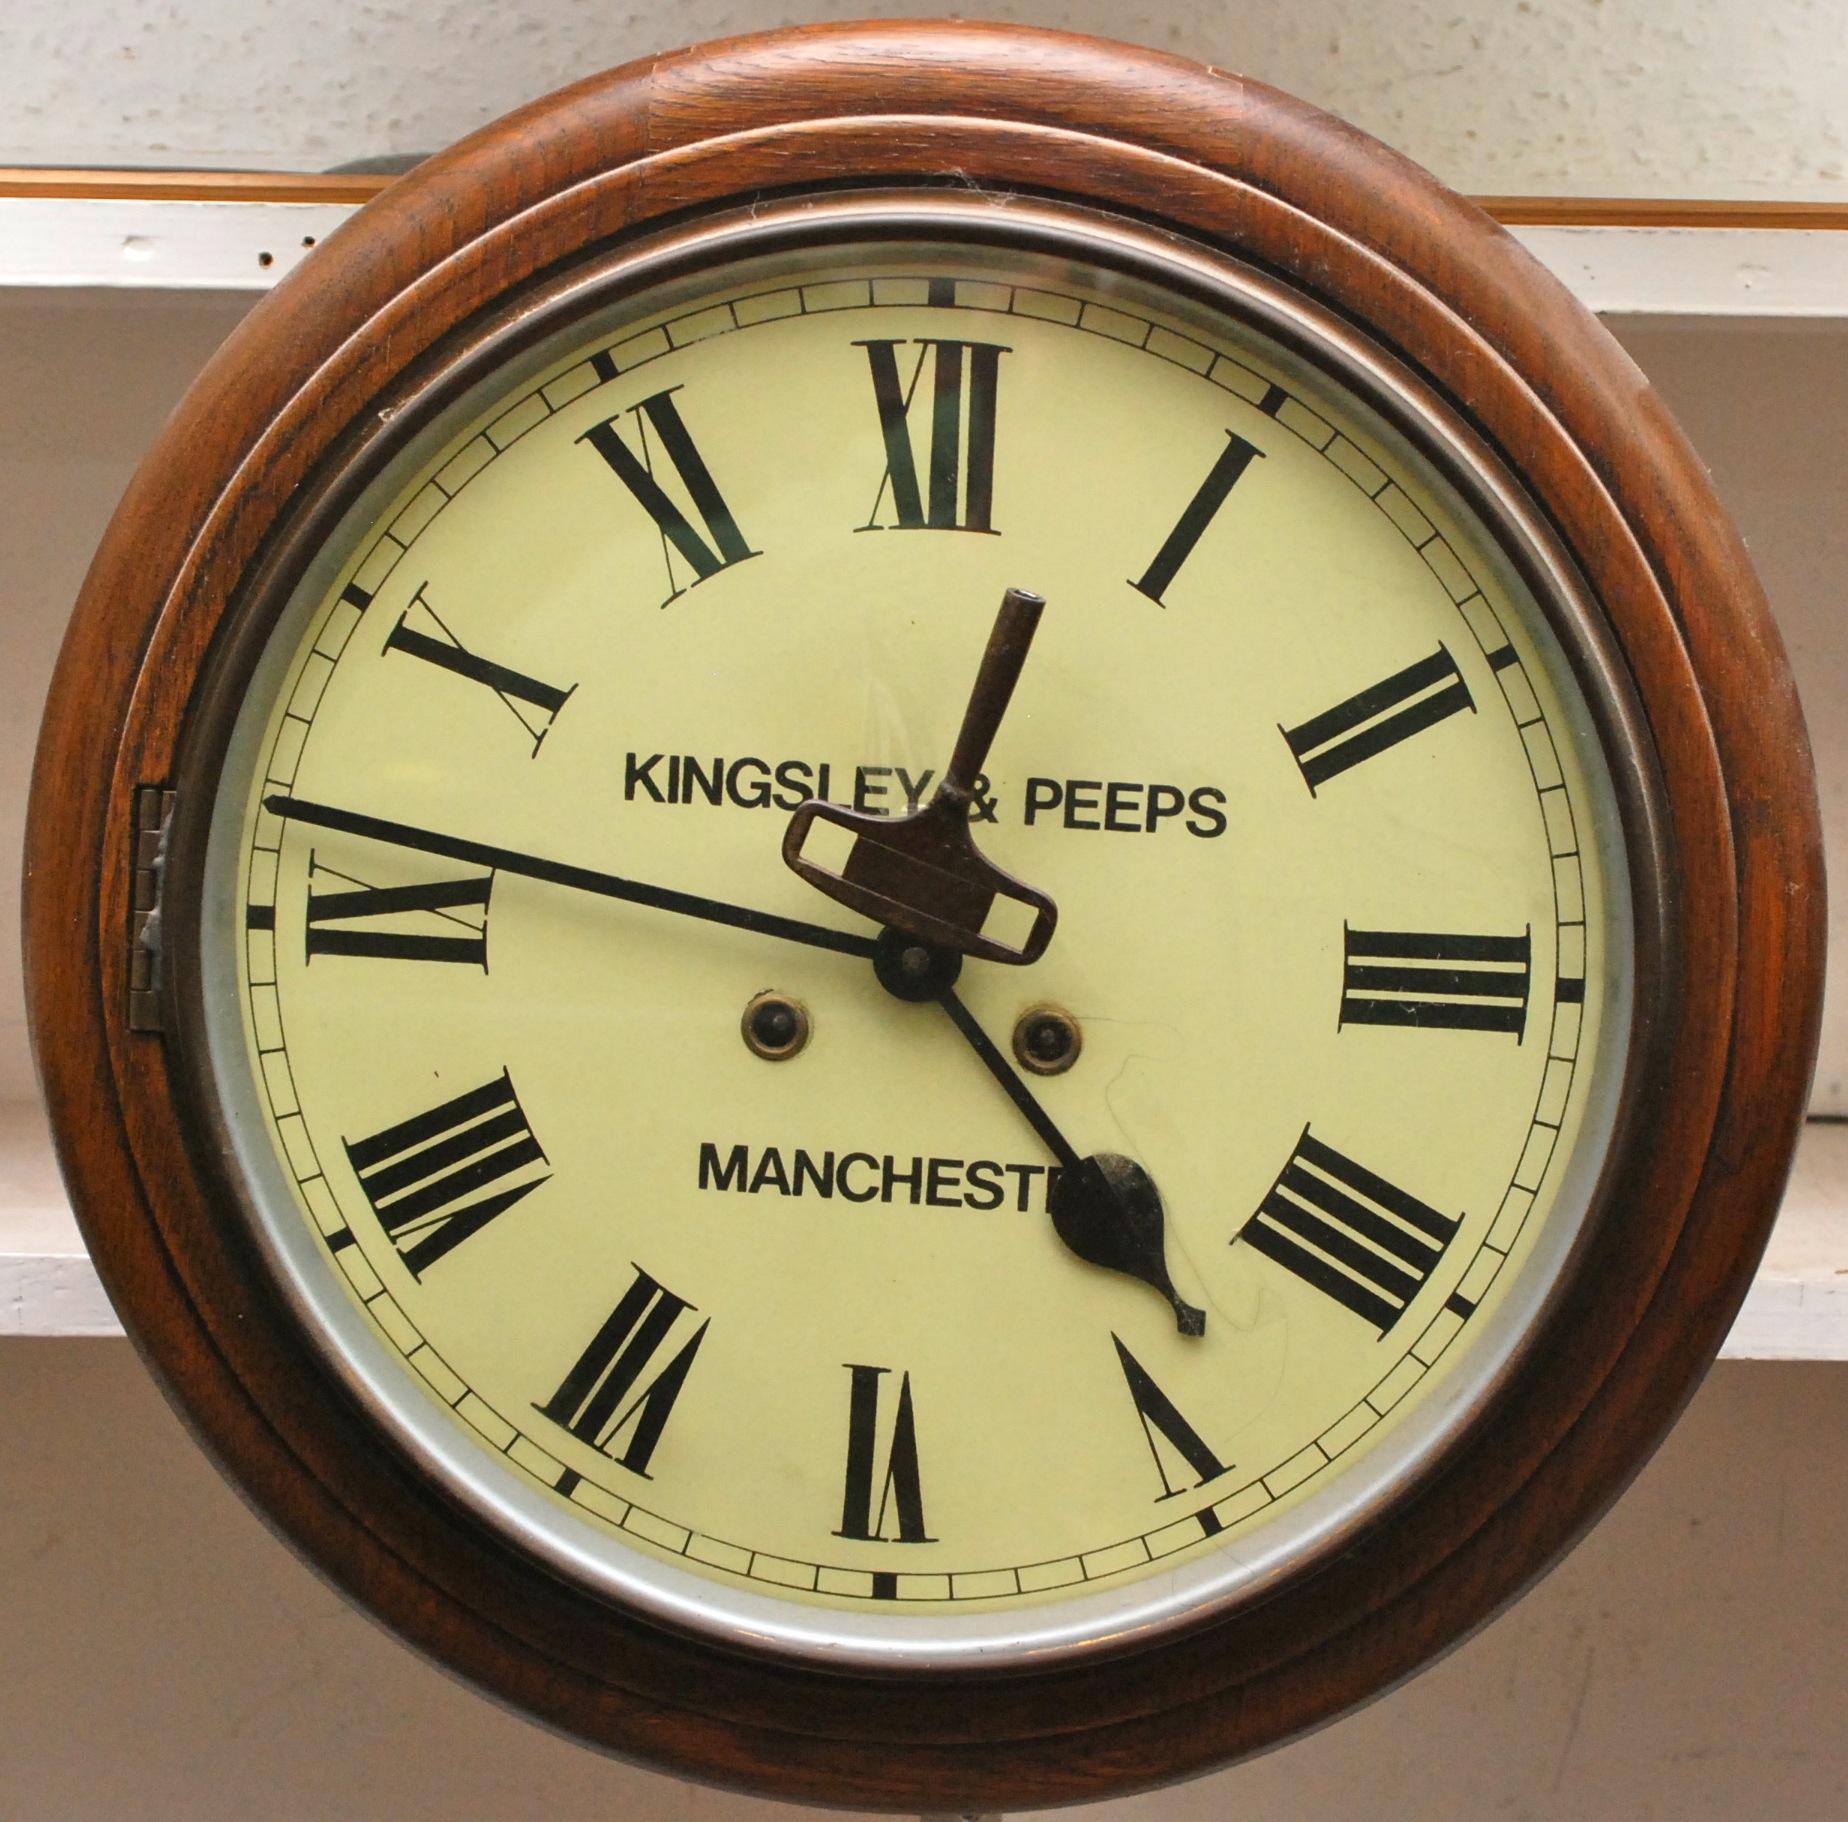 A wall clock signed Kingsley & Peeps, Manchester in oak case.